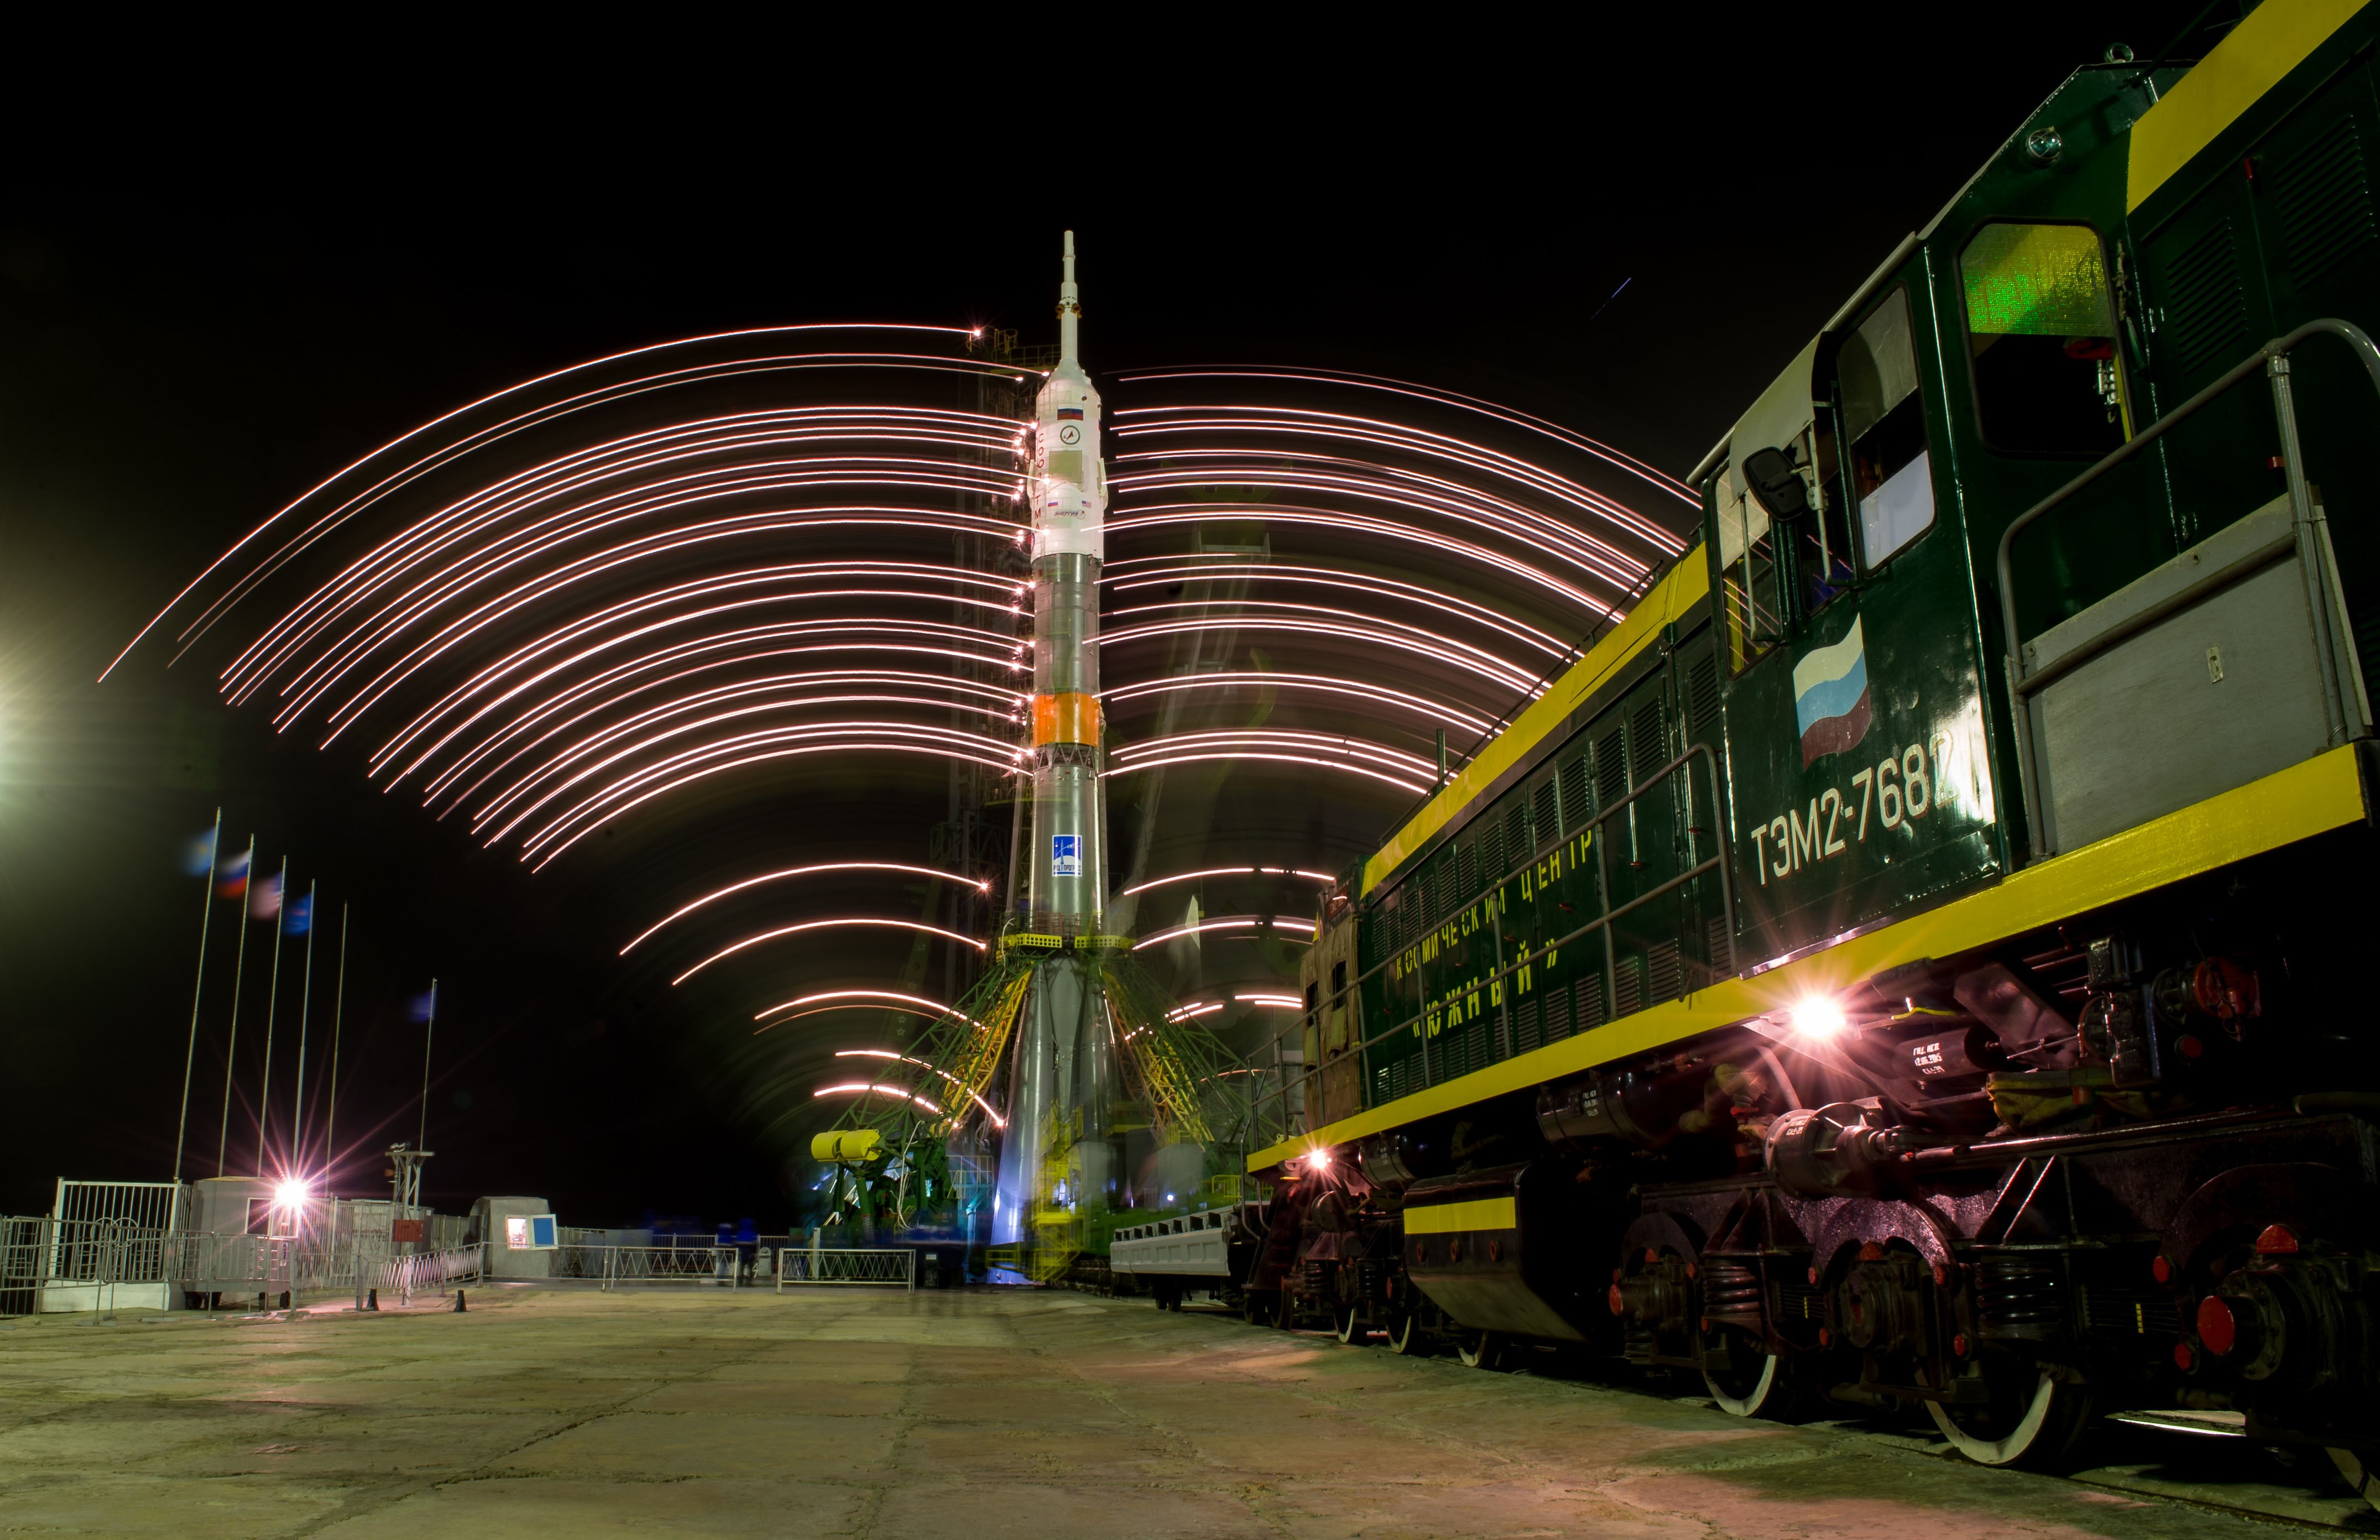 General 4304x2785 night lights train Baikonur Cosmodrome Kazakhstan rocket Russian long exposure light trails Soyuz vehicle numbers low light